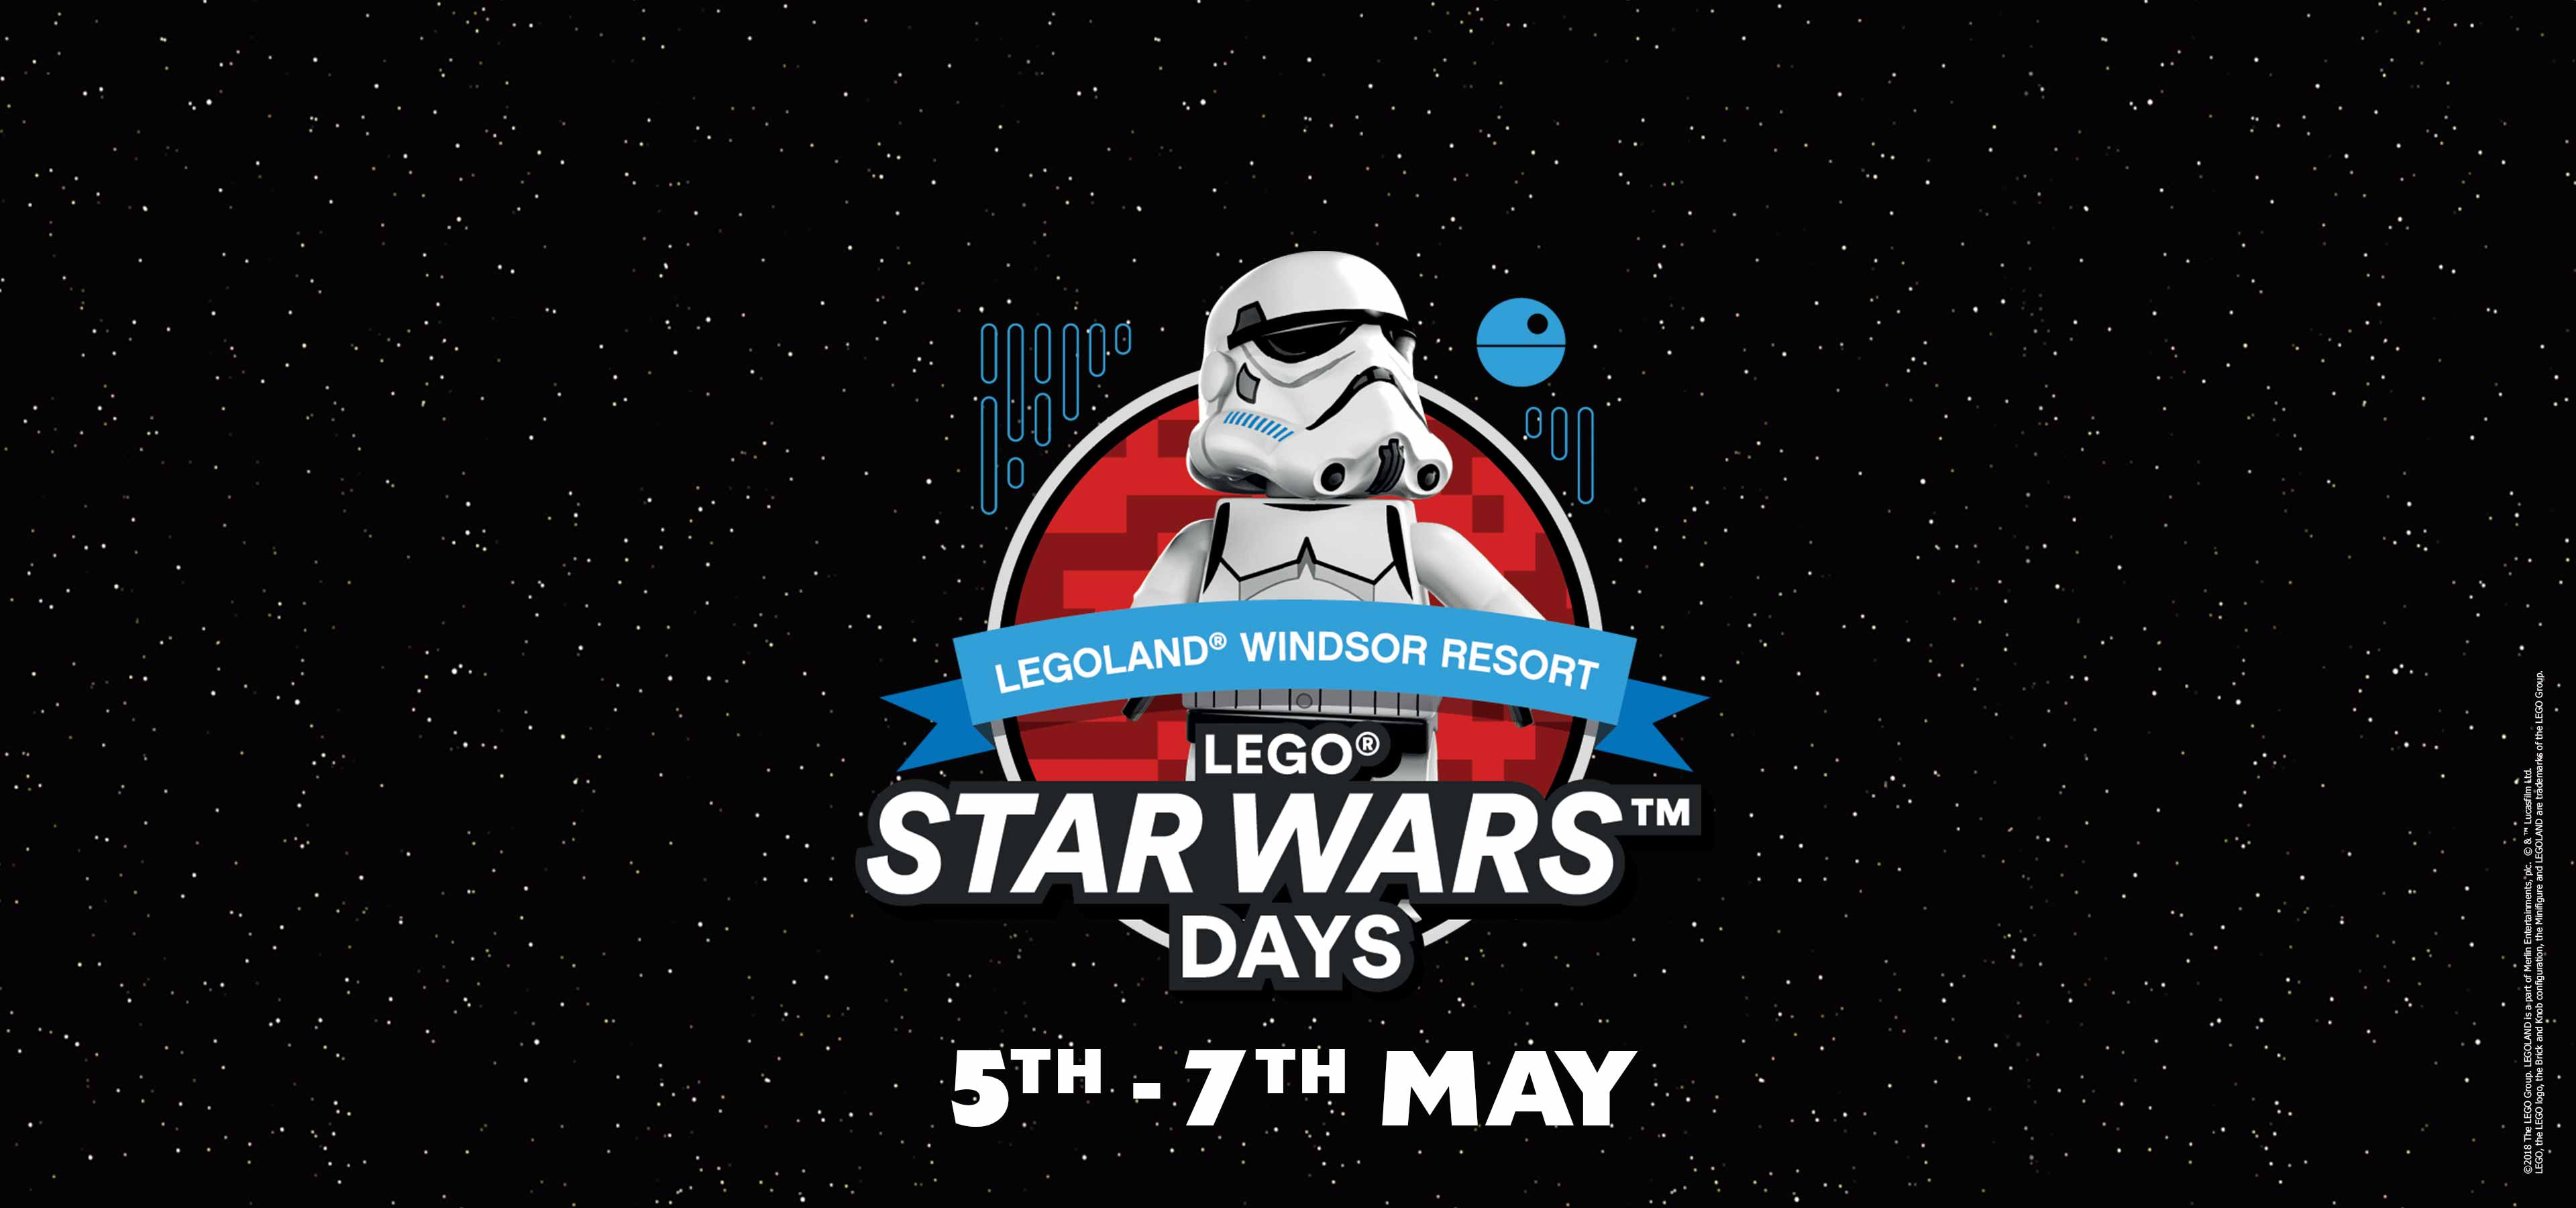 LEGO Star Wars Days 2018